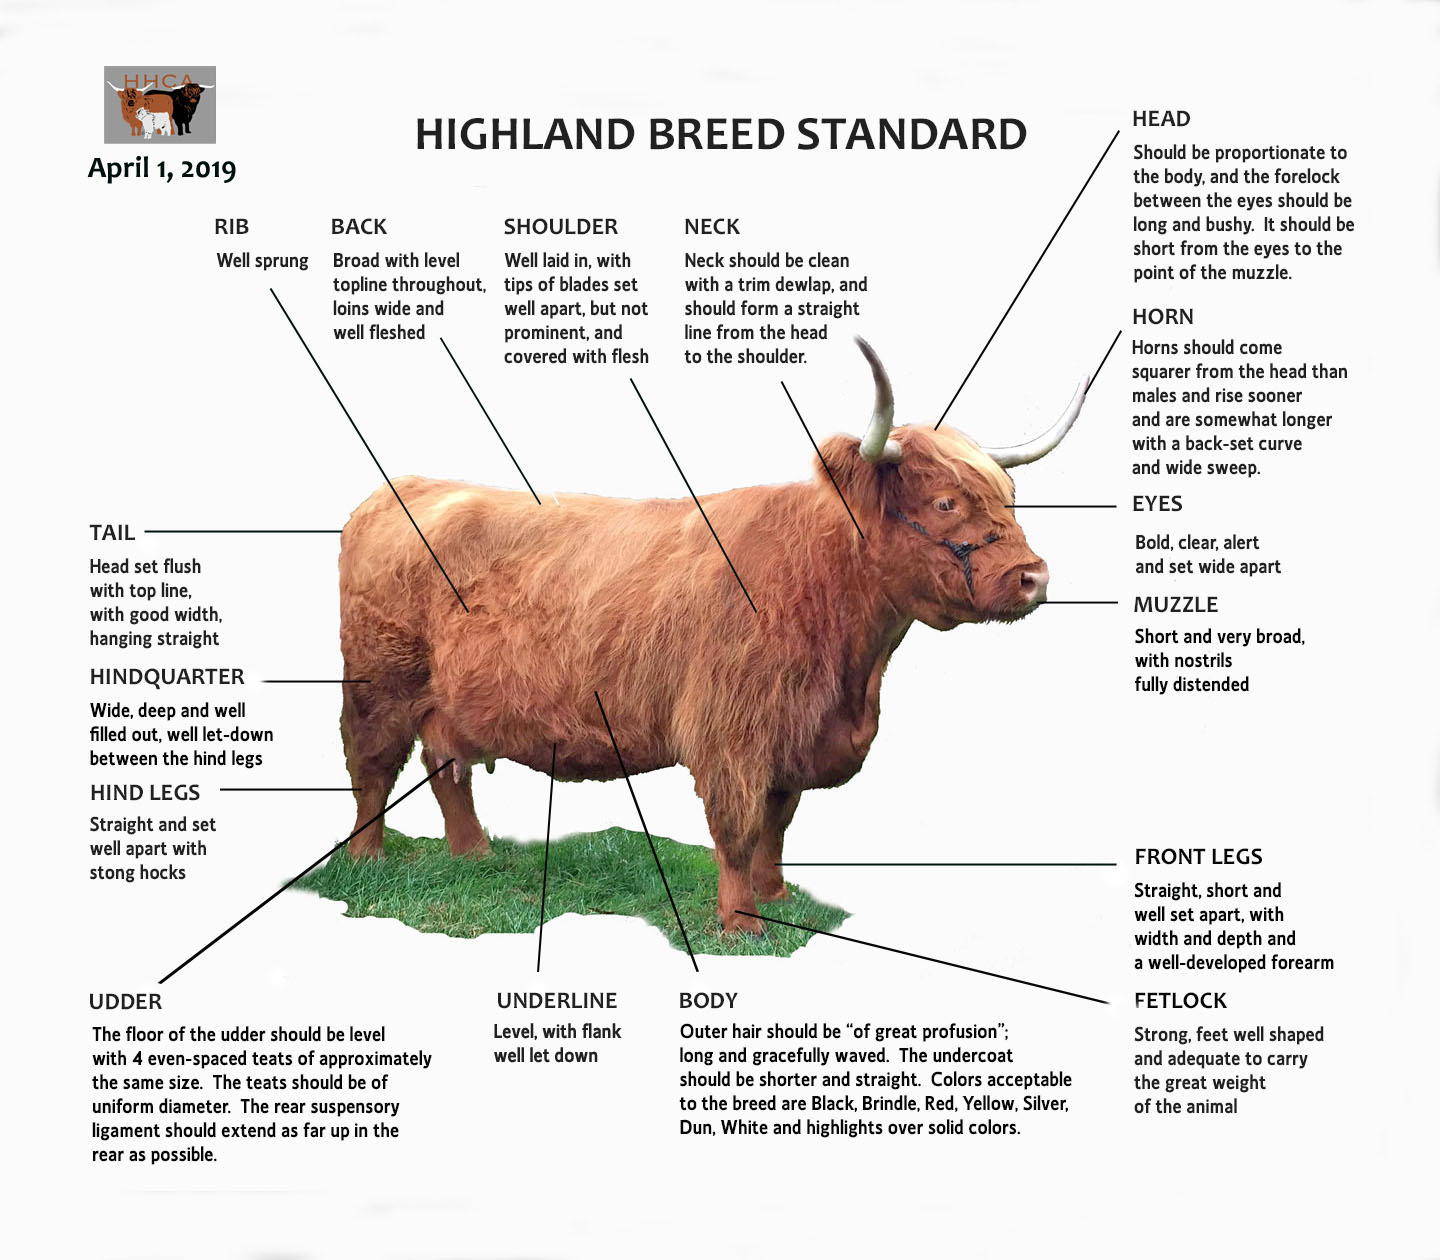 Highland Cattle Society